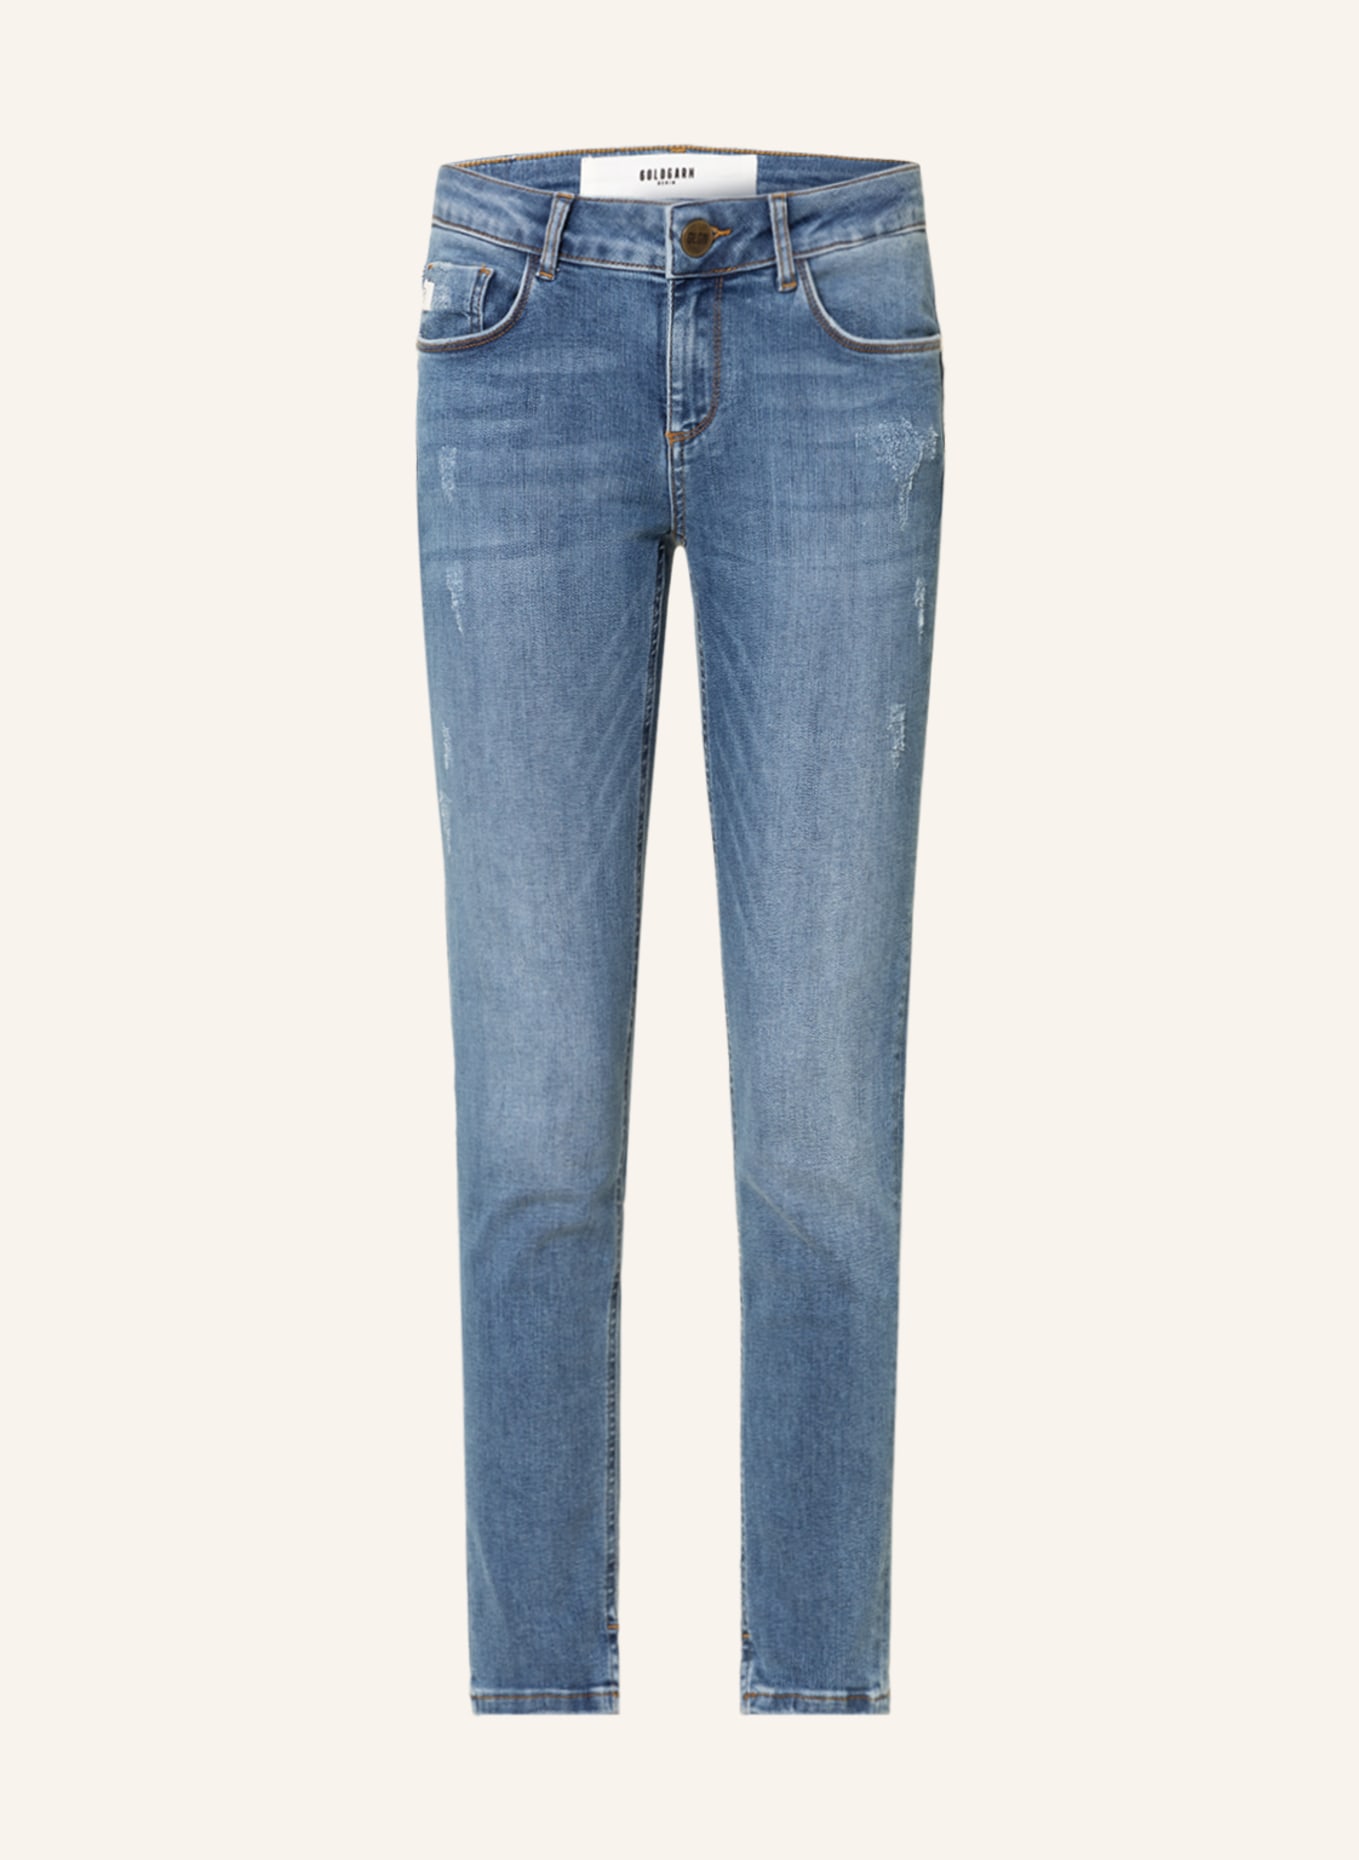 GOLDGARN DENIM Skinny Jeans JUNGBUSCH, Farbe: 1010  vintage blue (Bild 1)